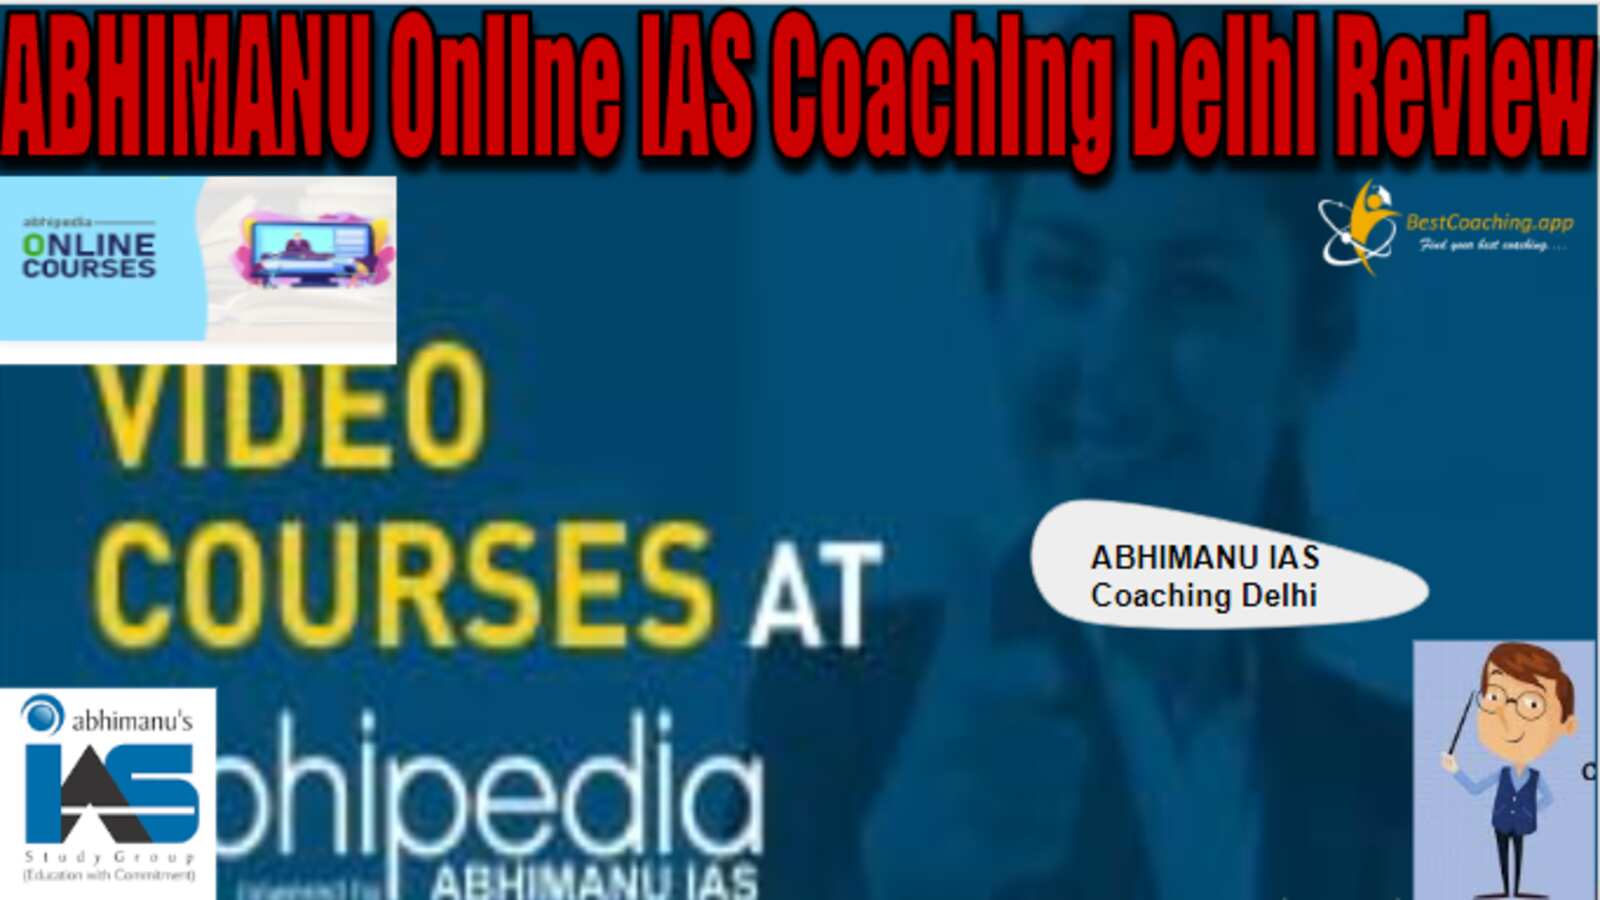 ABHIMANU Online IAS Coaching Delhi Review